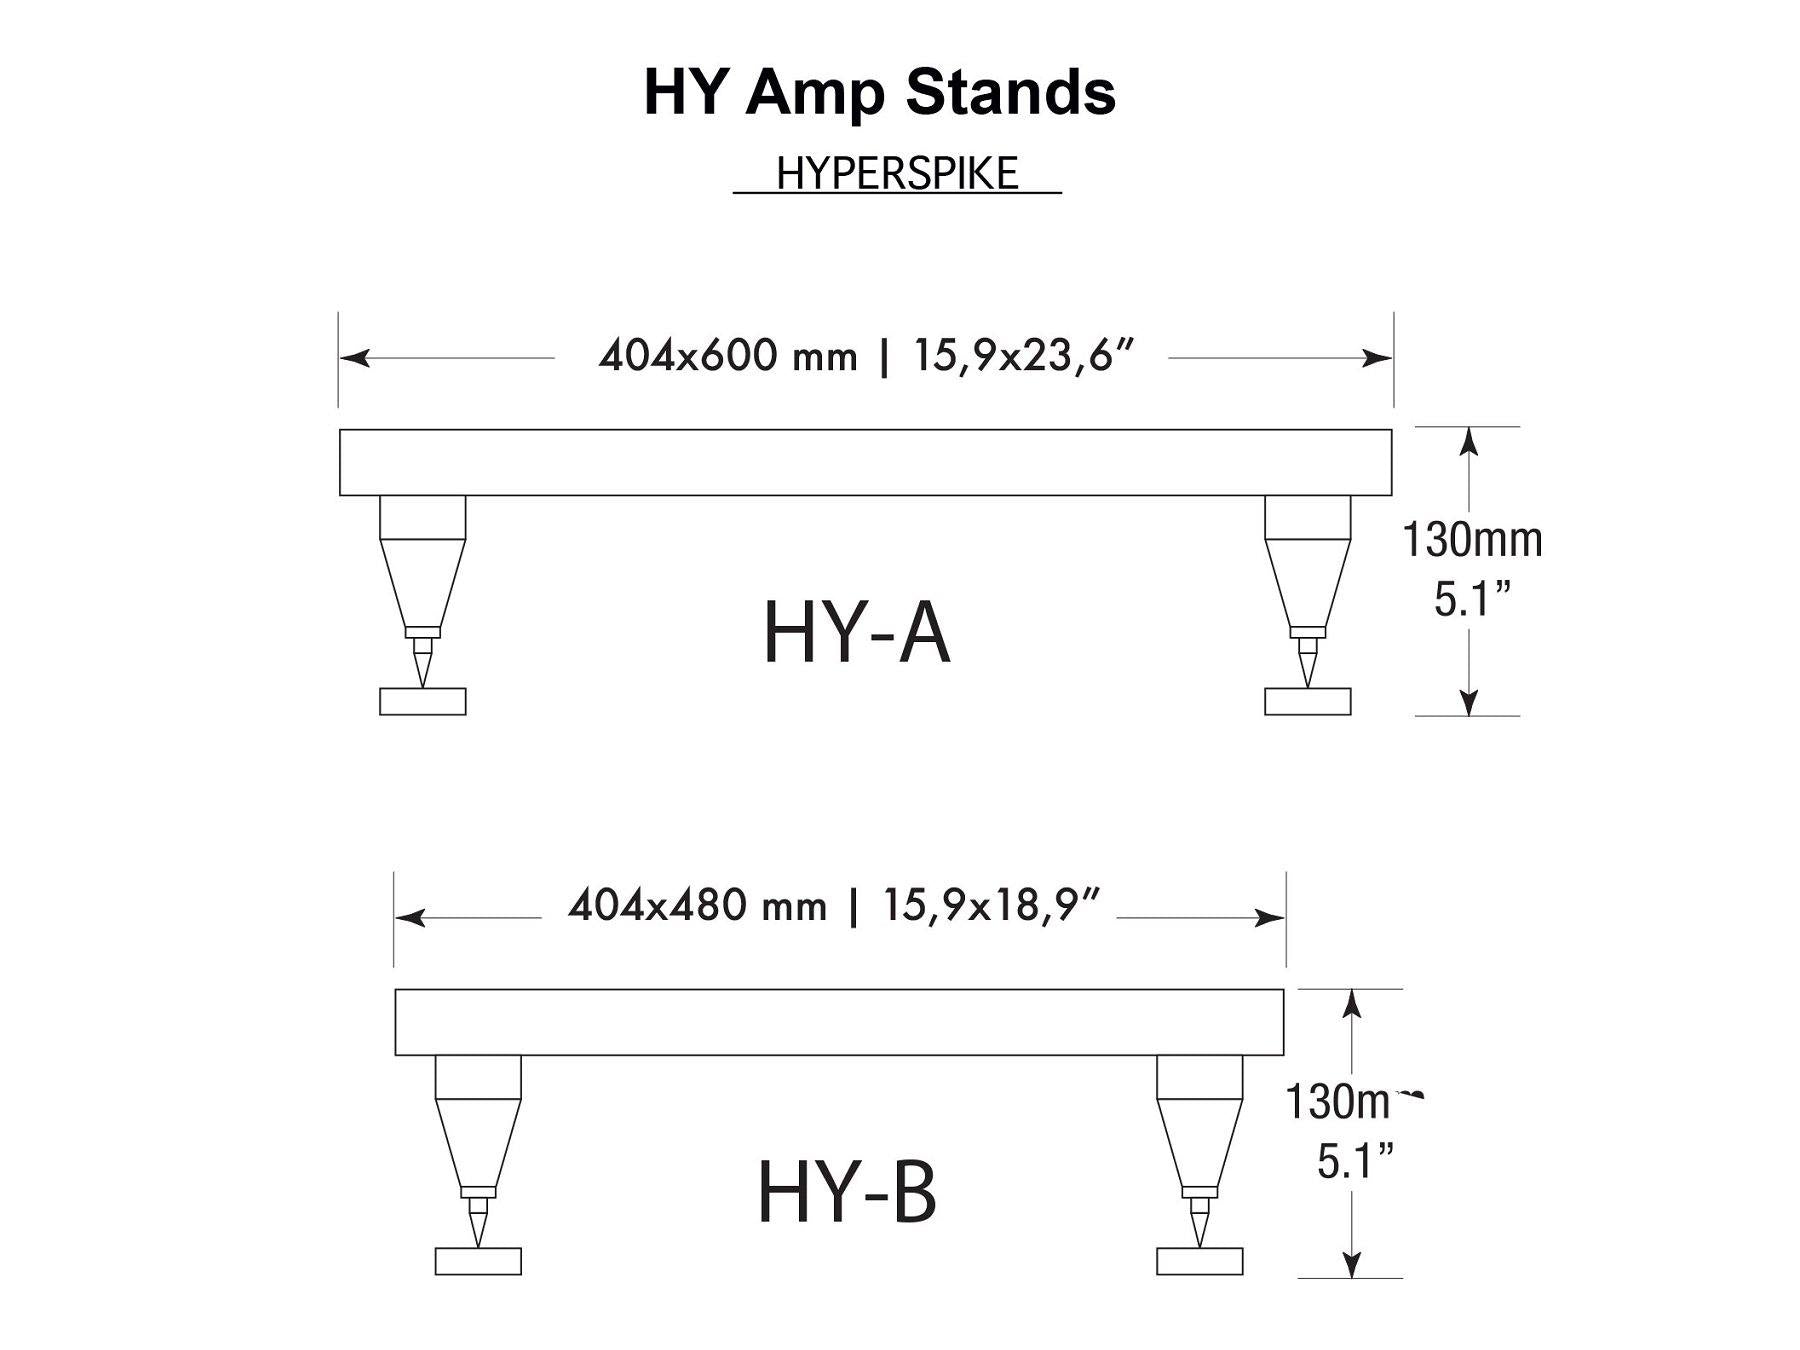 Solidsteel HY A / B Hyperspike - Hi-Fi Power Amp Stand